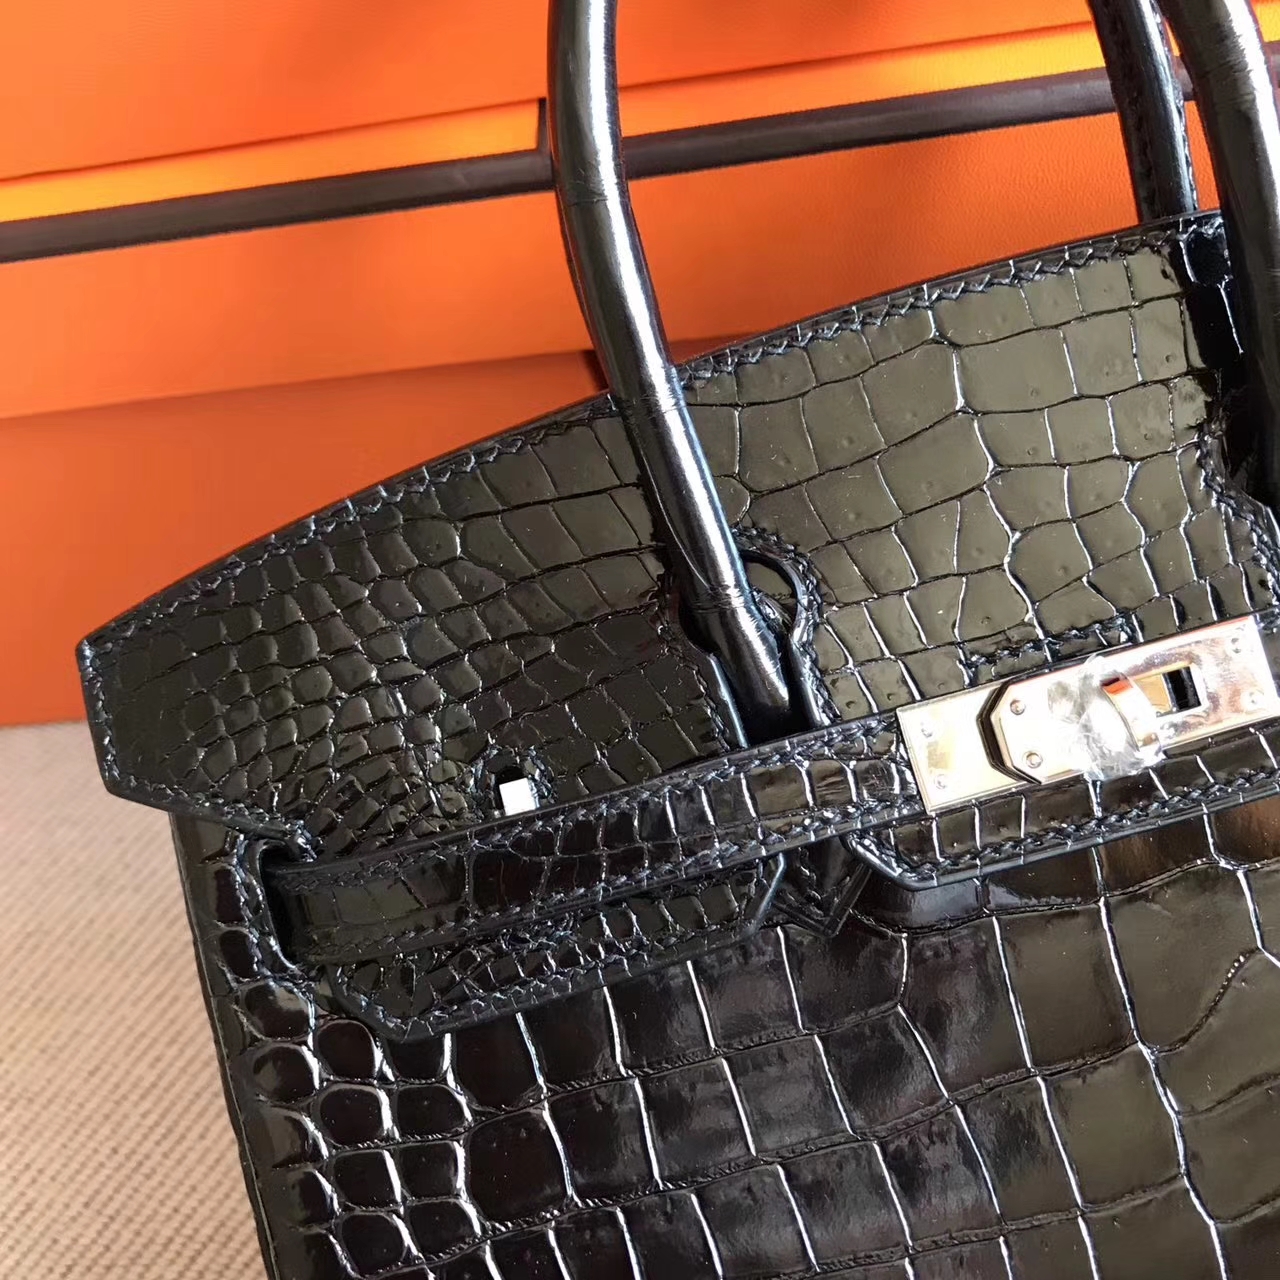 Luxury Women&#8217;s Handbag Hermes CK89 Black Crocodile Shiny Birkin Bag25cm